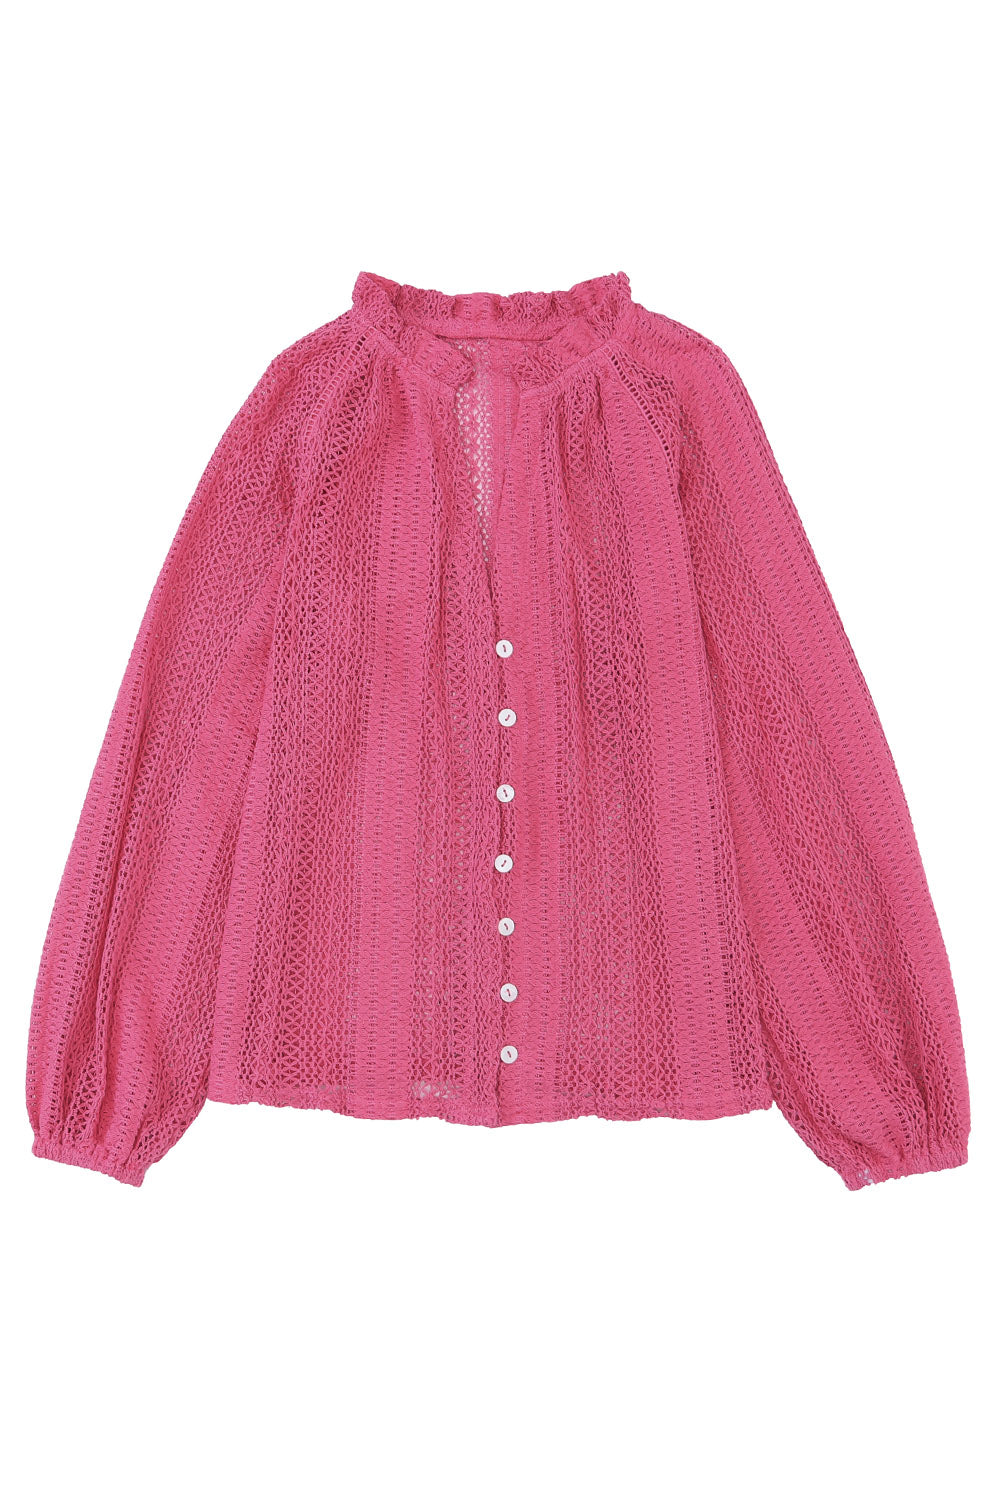 Rose V-Neck Long Sleeve Button Up Lace Shirt-10